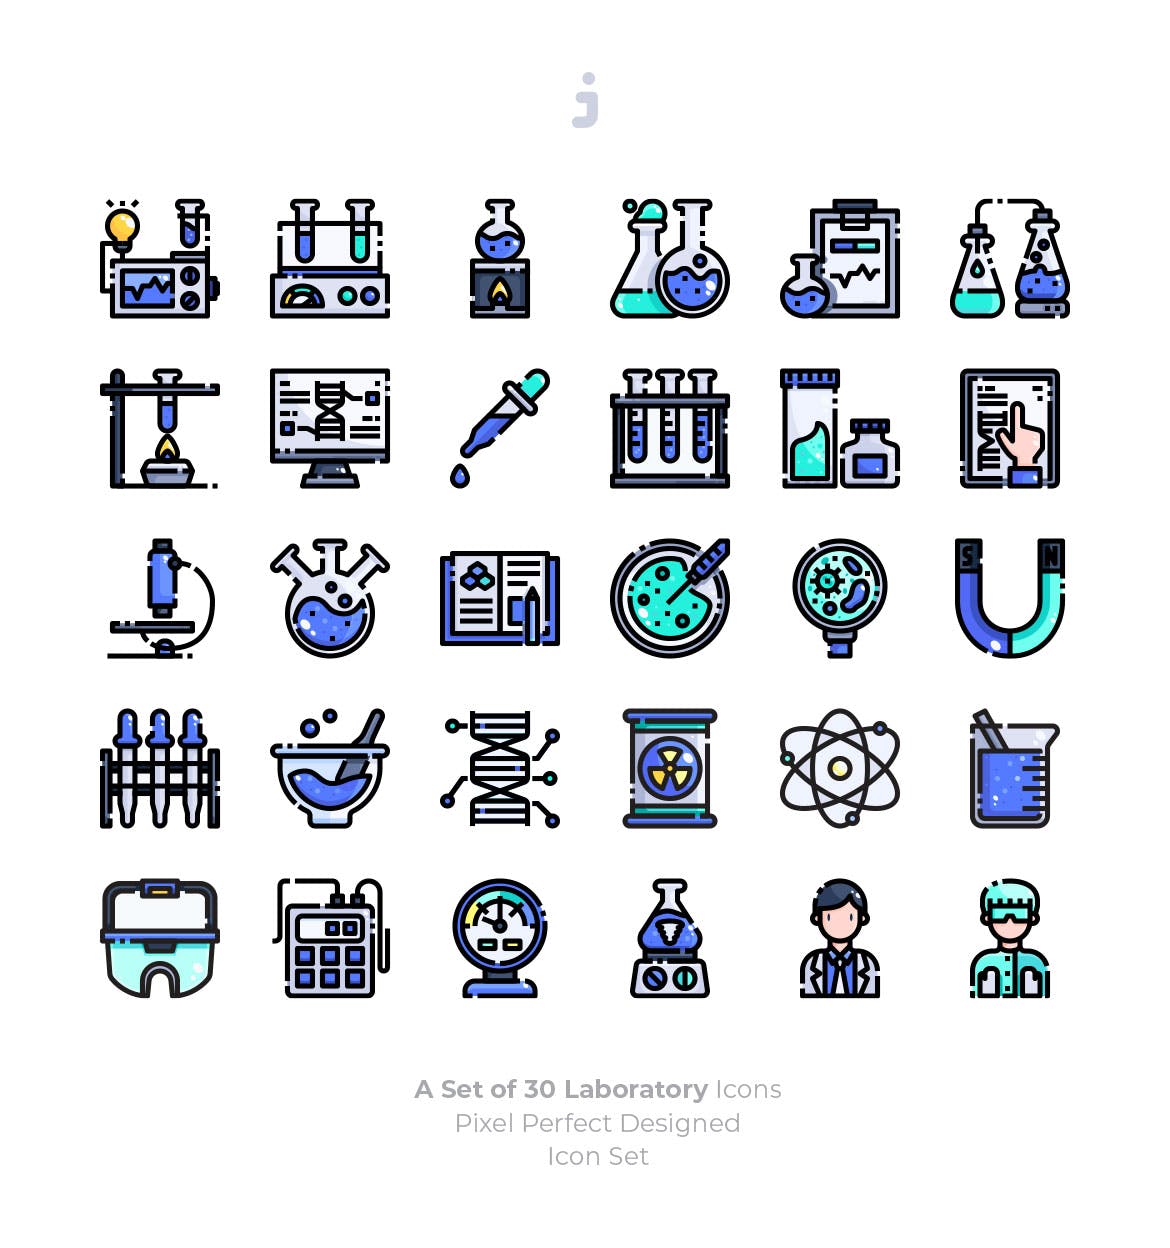  30实验室创意图标源文件下载30 Laboratory Icons插图1